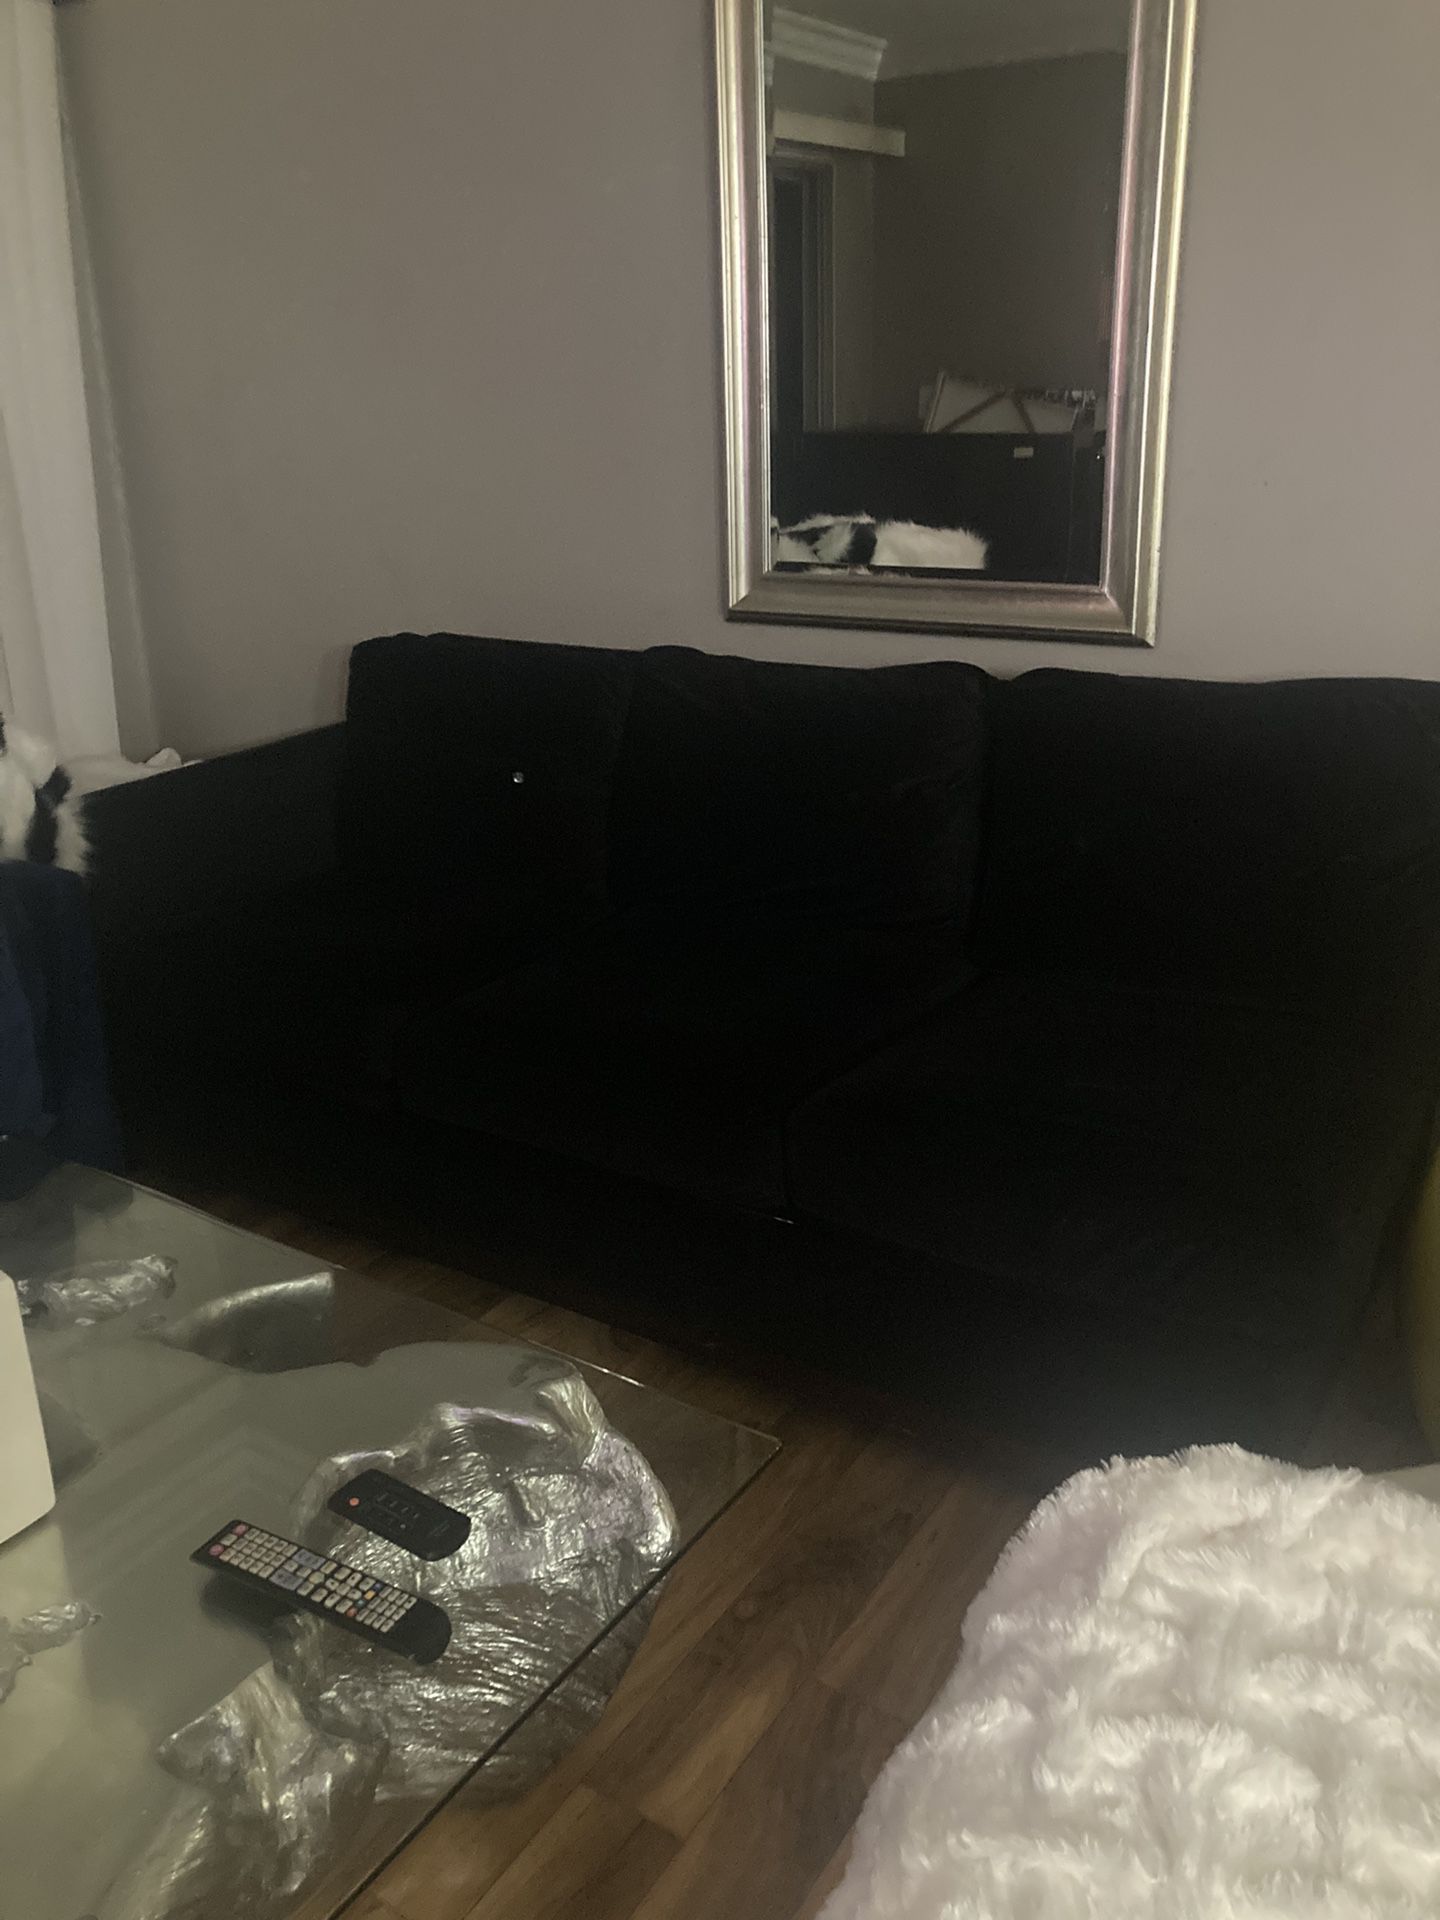 Black Sofa 